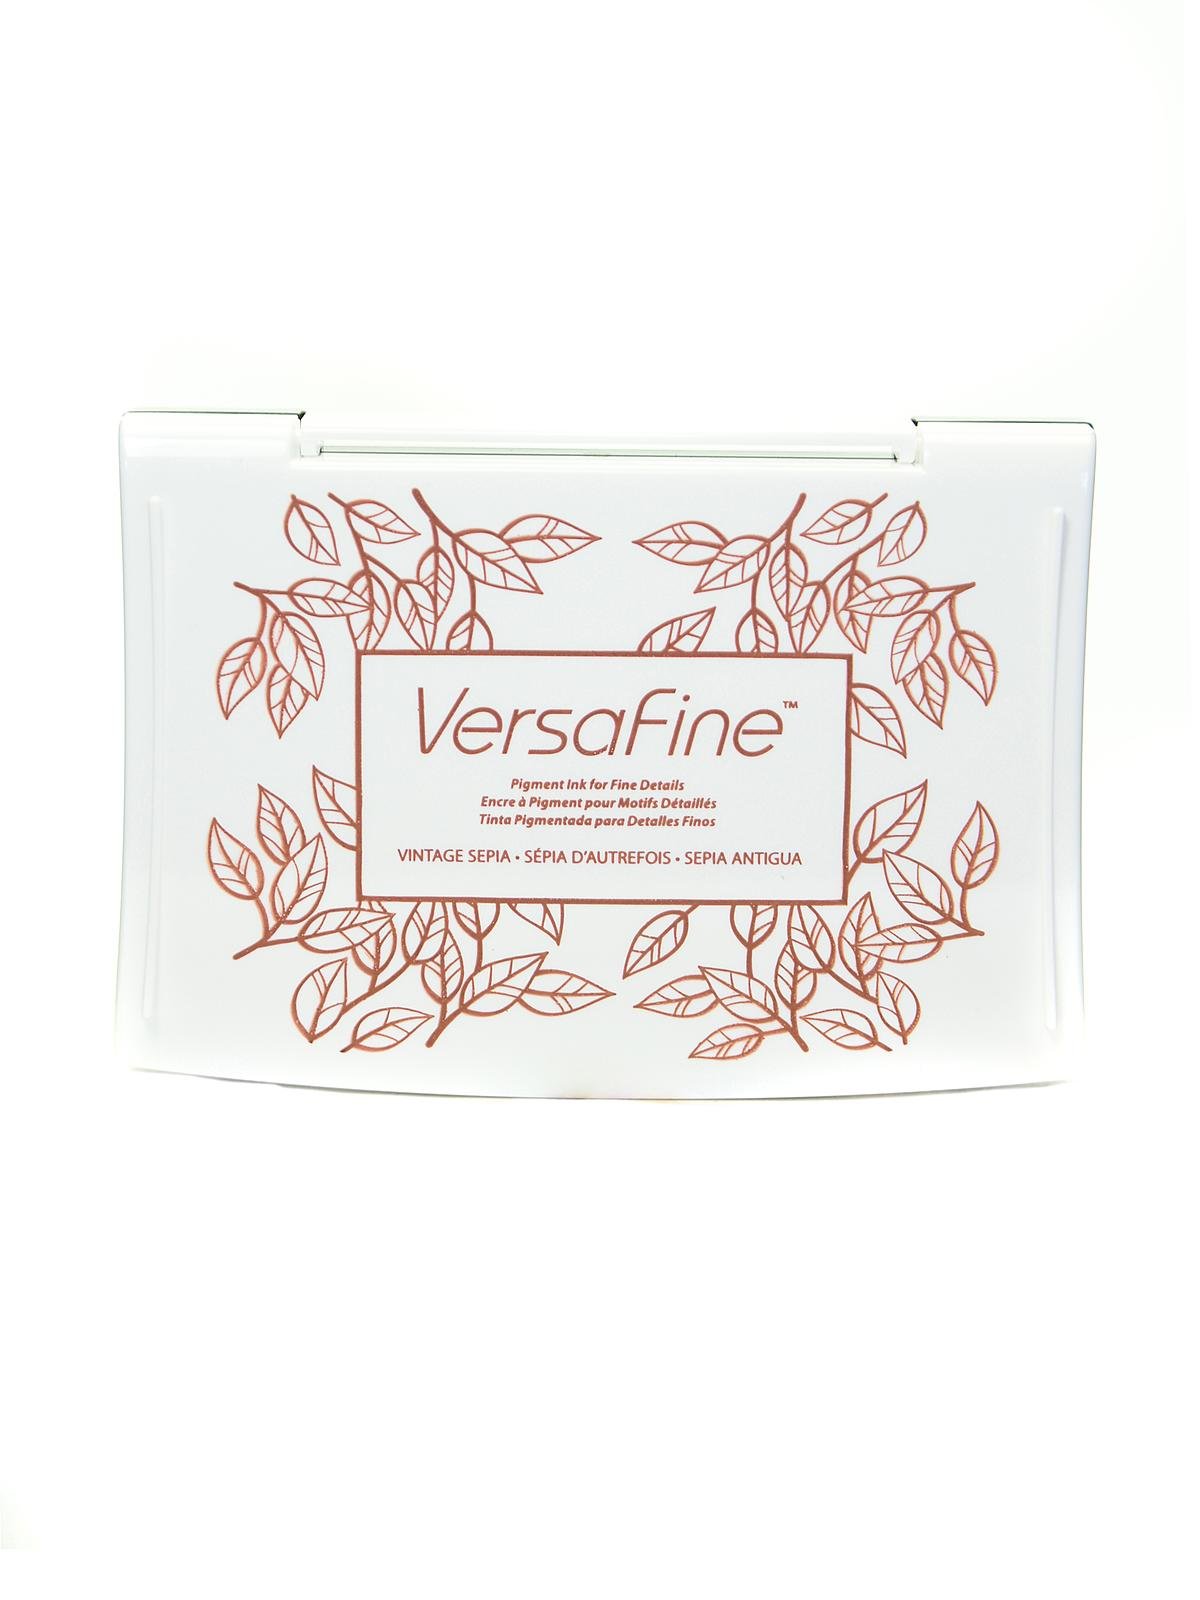 VersaFine Pigment Ink Pad - SMOKEY GRAY Fine Stamp Pad – Hallmark